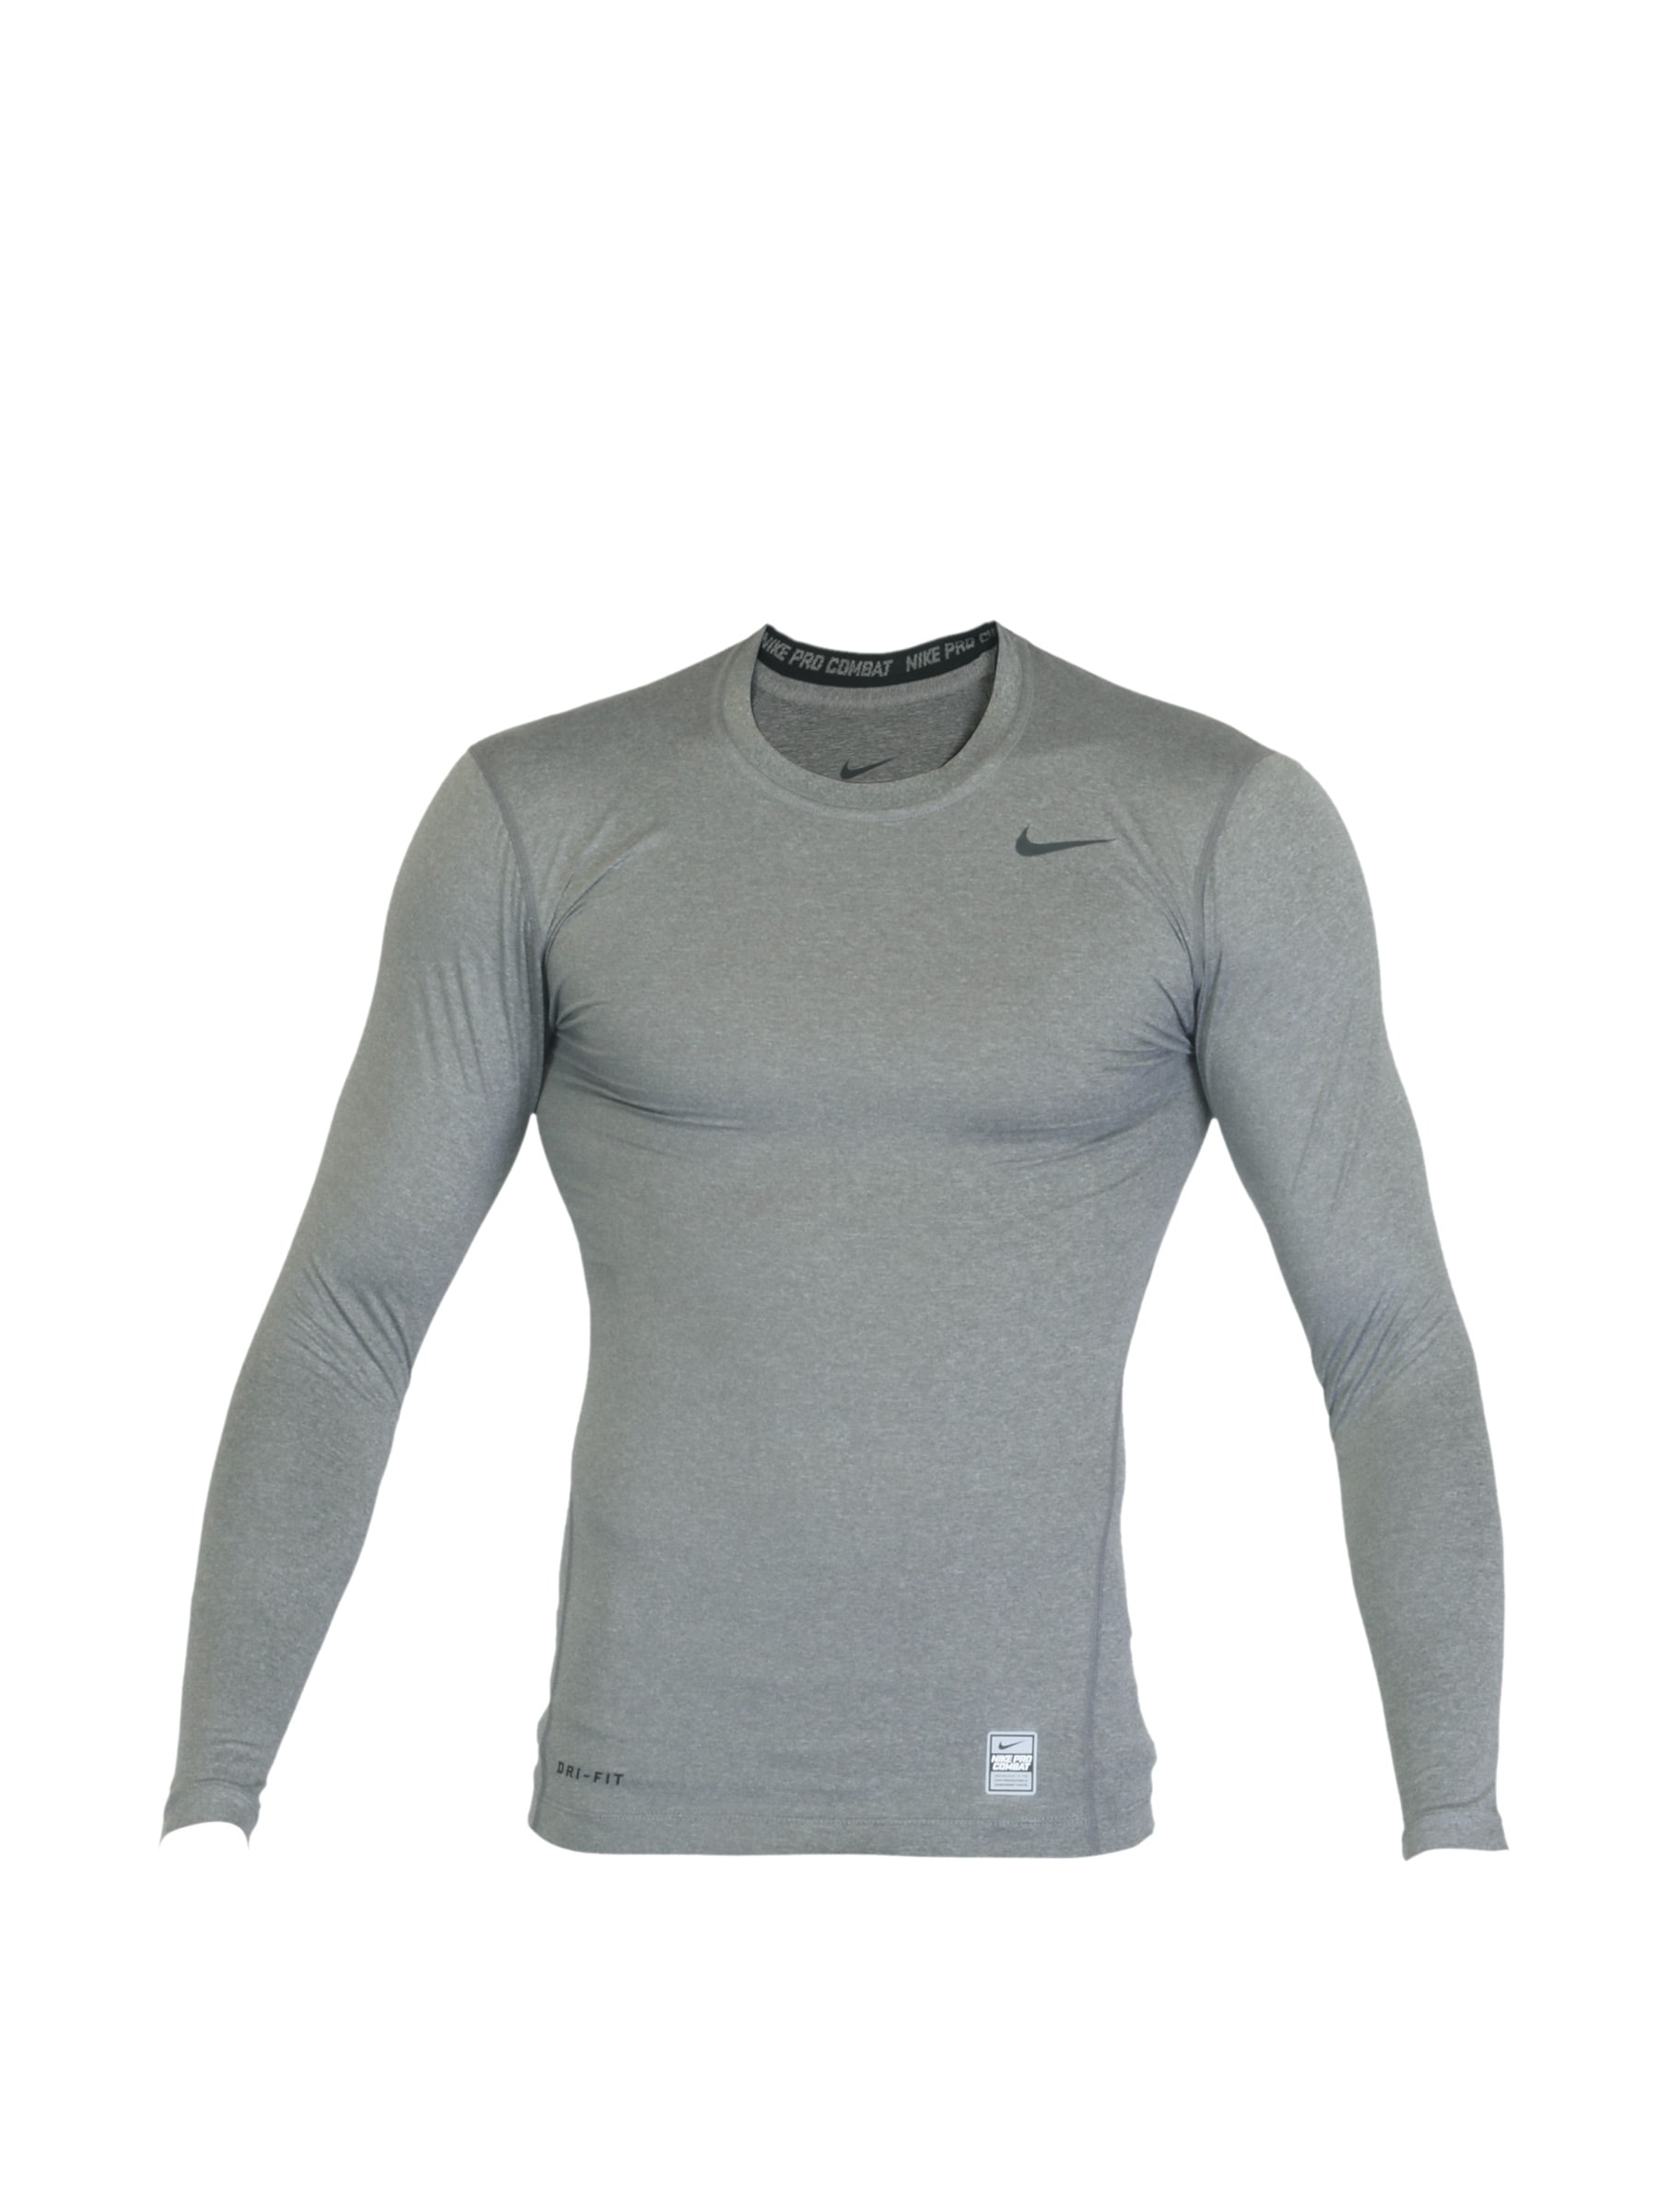 Nike Men Compression Grey T-shirt